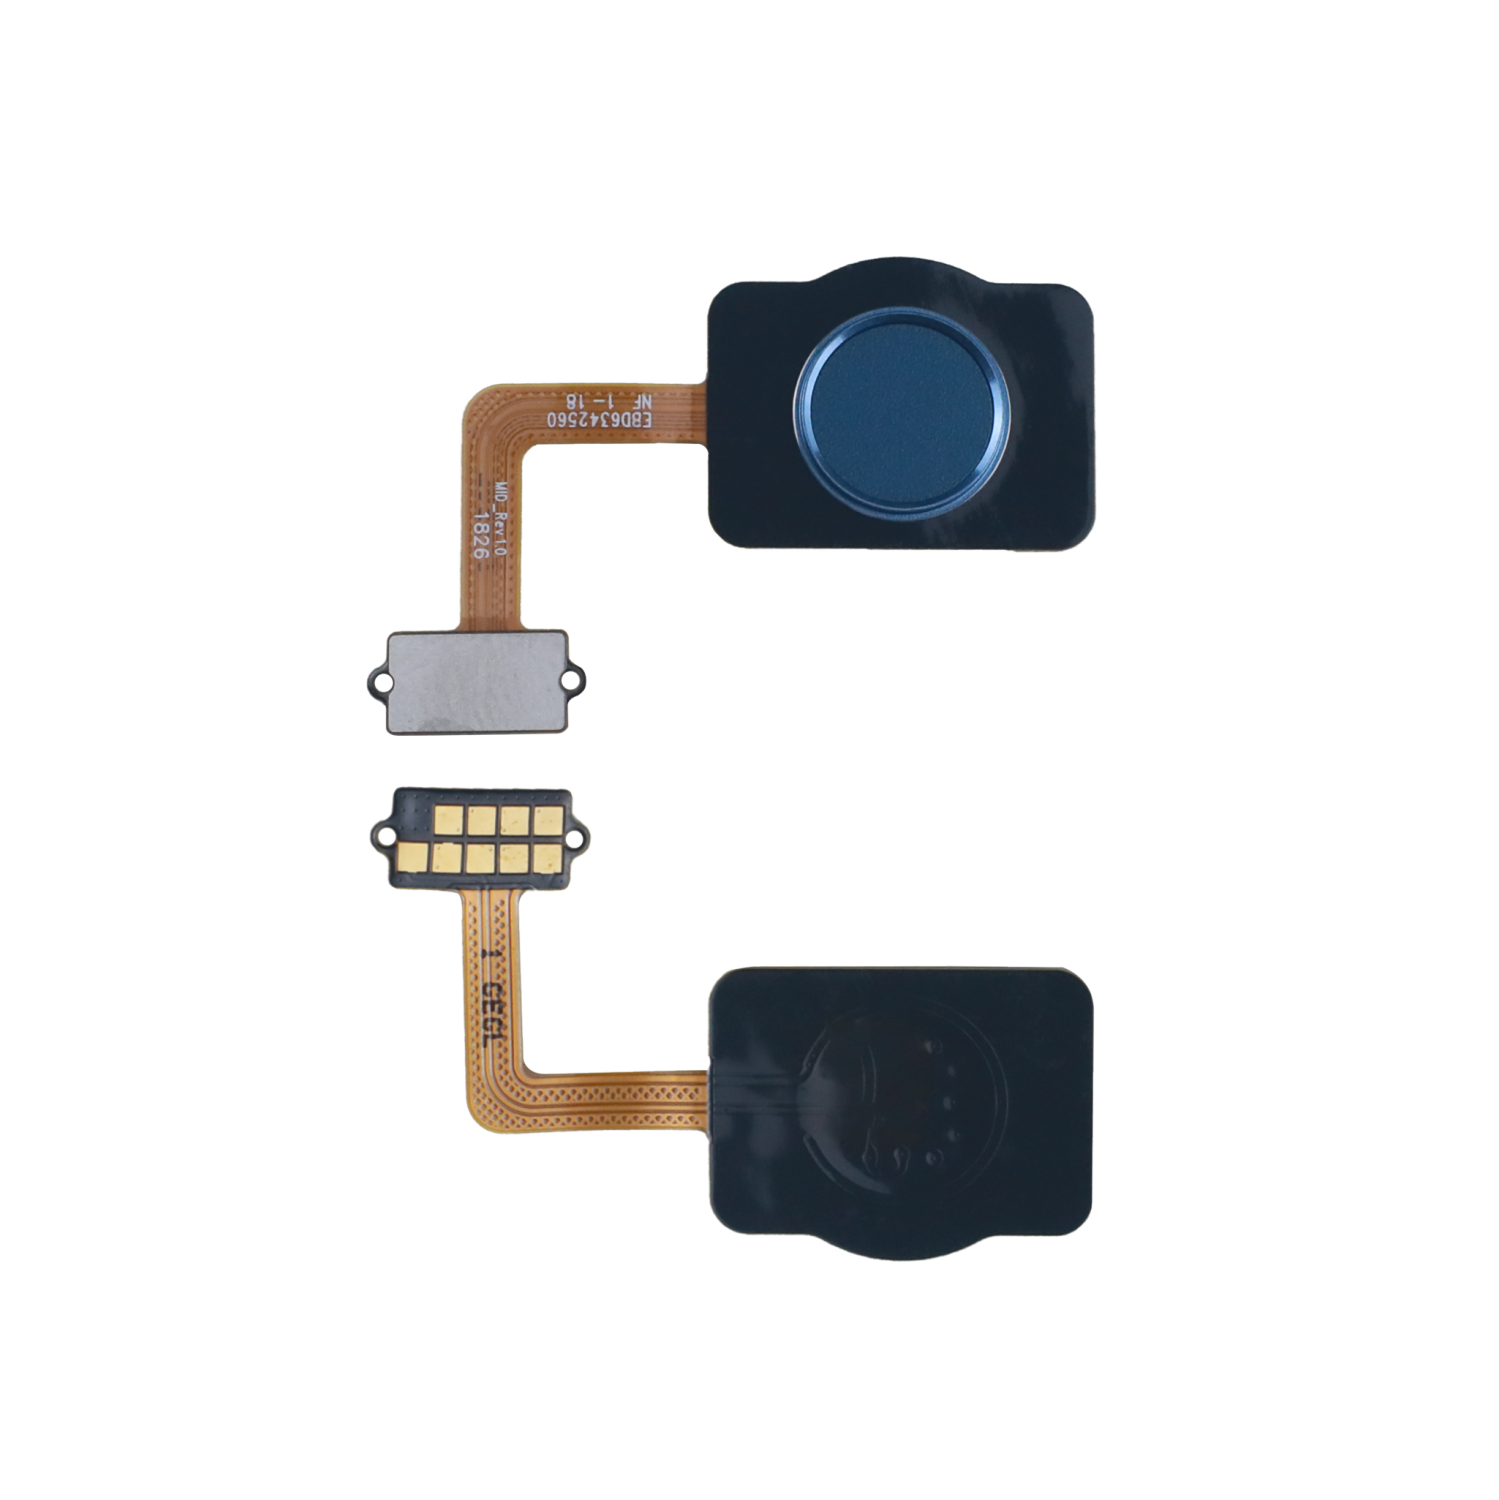 Replacement Fingerprint Reader With Flex Cable Compatible For LG Q7 Alpha / Q7 Plus (Moroccan Blue)